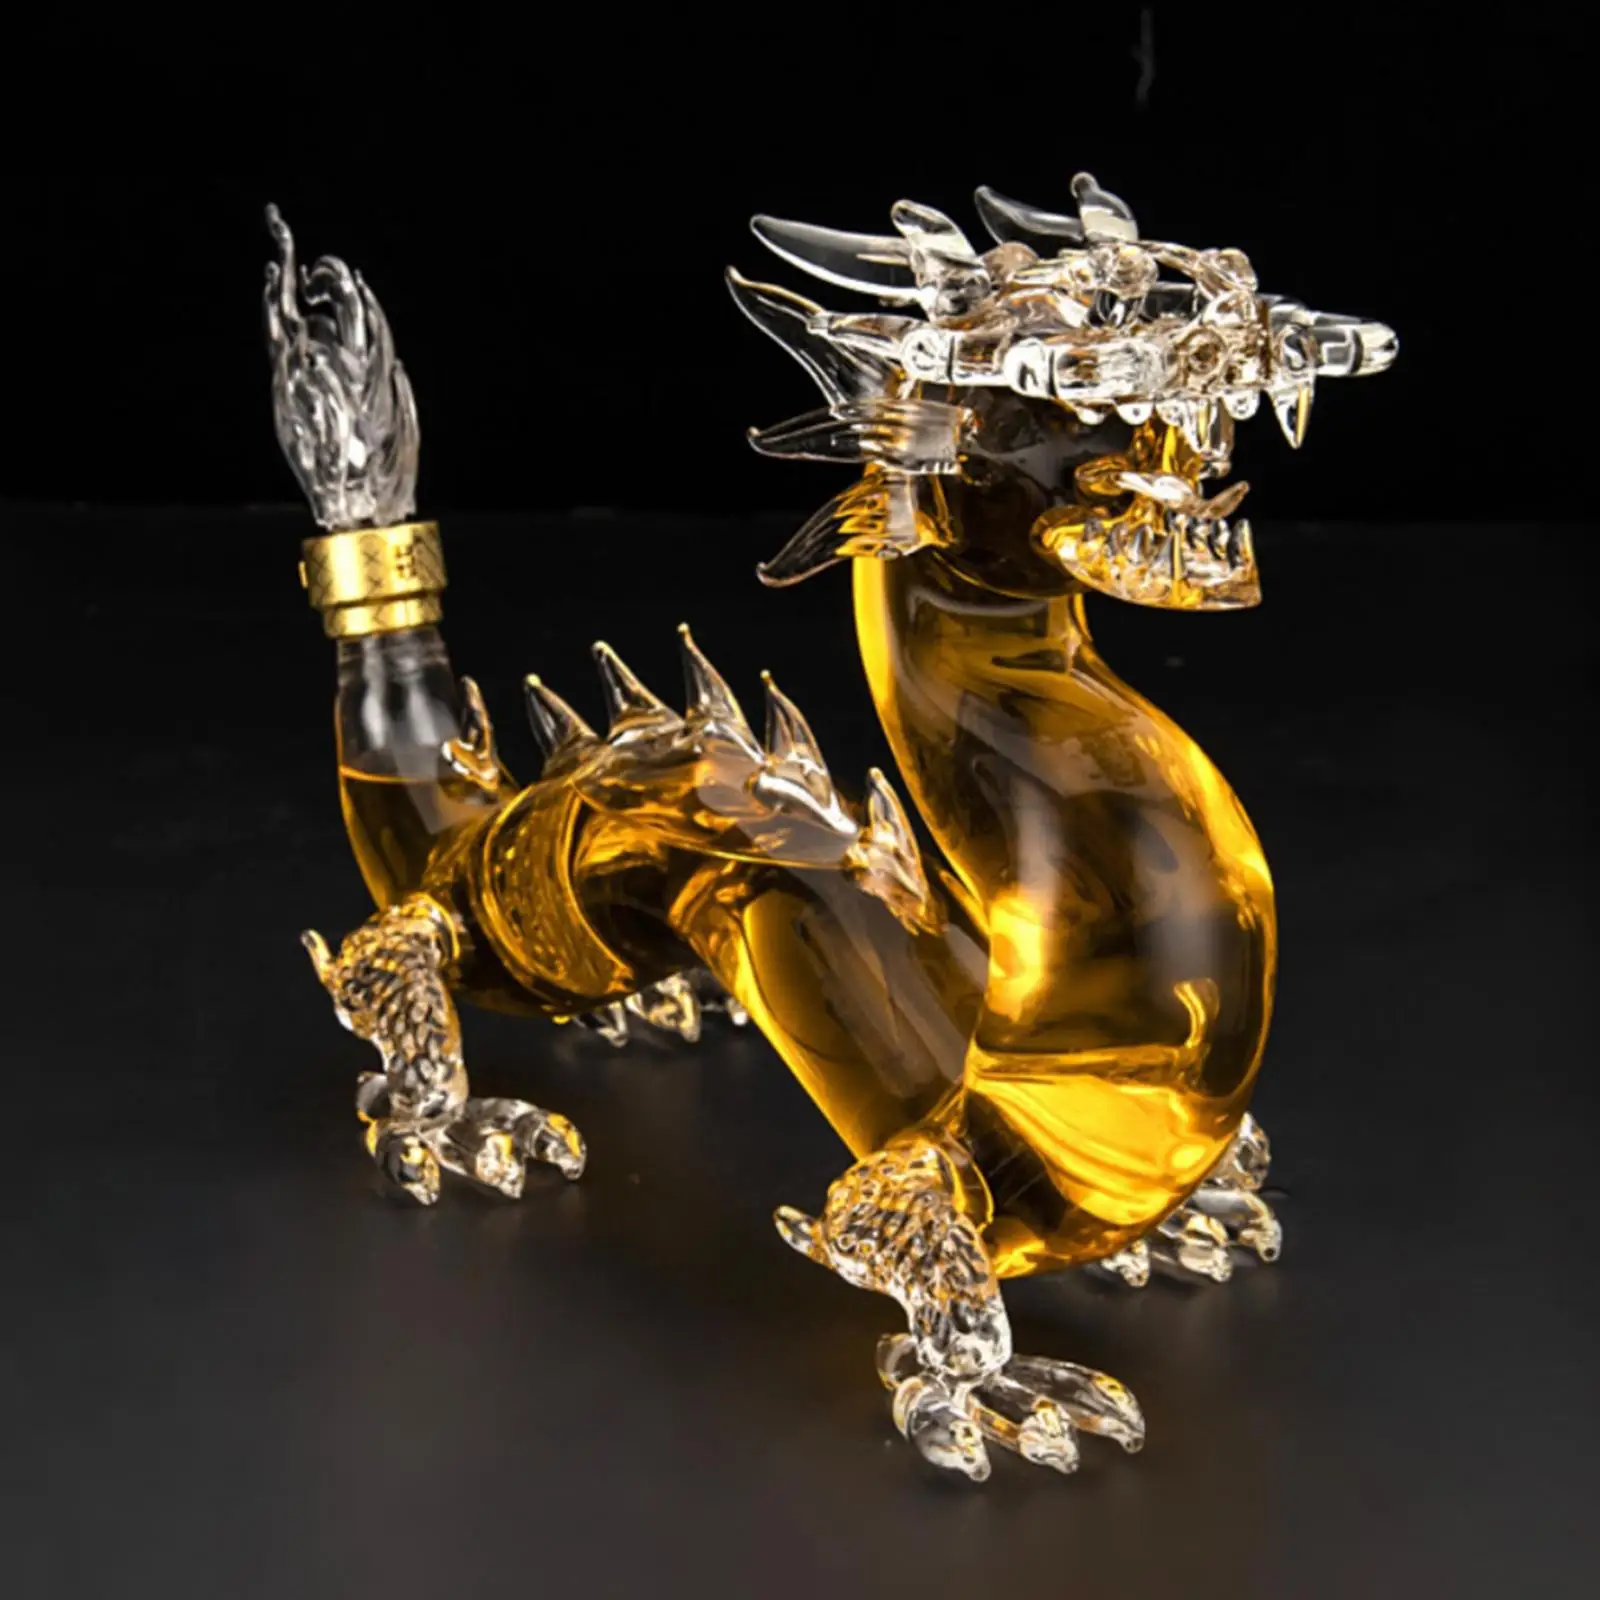  Decanter-Glass Dragon Figurine Entertaining Barware  Drinkware  Tools Dining Restaurant, Bar, Men, Adults